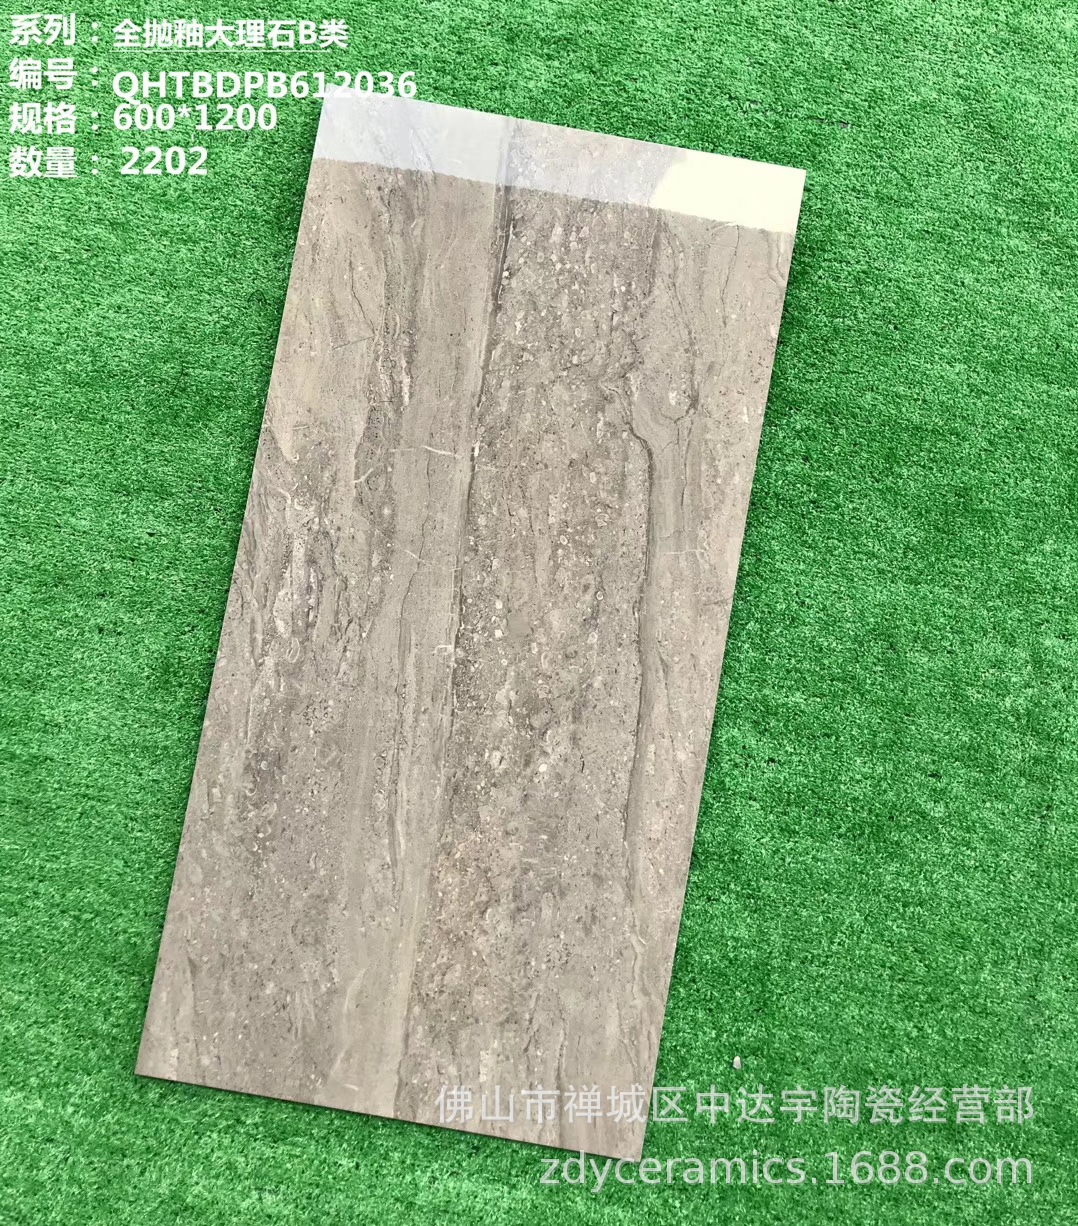 FS全抛釉大理石瓷砖600X1200MM QHTBDPA612033-B客厅卫生间地板砖示例图19